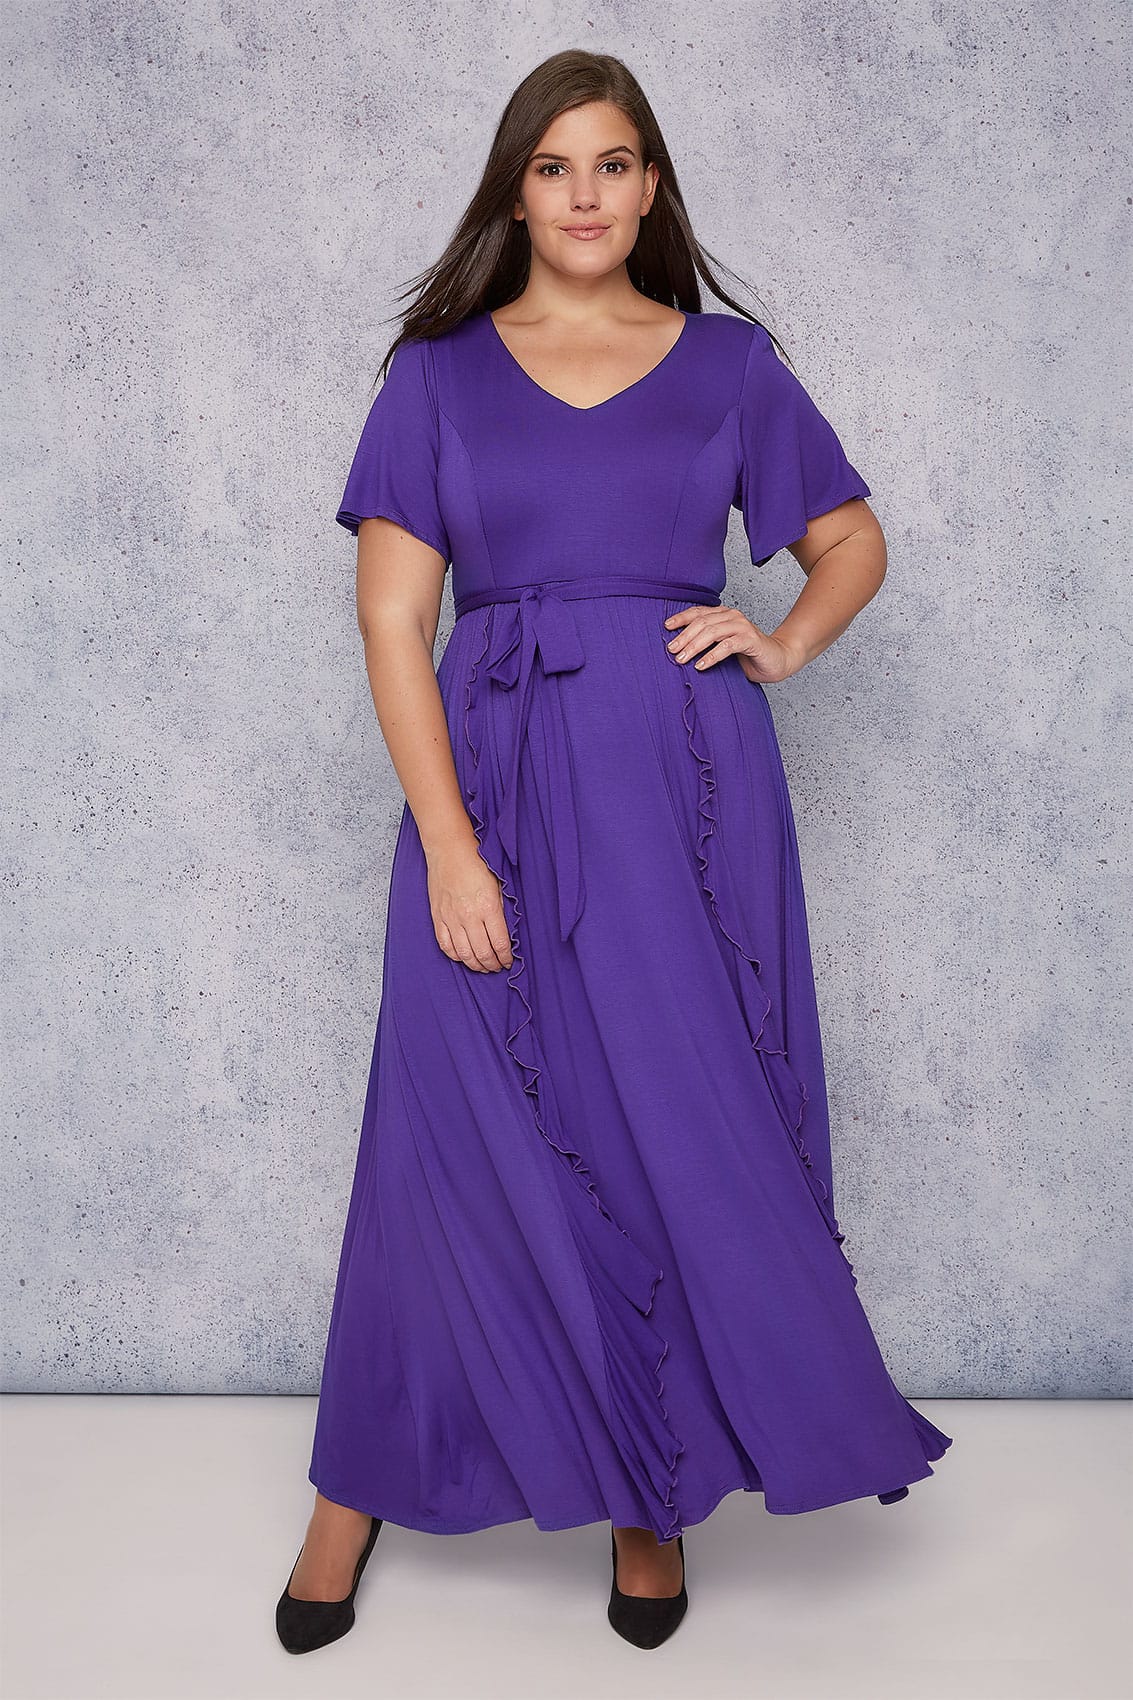 SCARLETT & JO Purple Maxi Dress With Frill Detail, Plus size 16 to 32